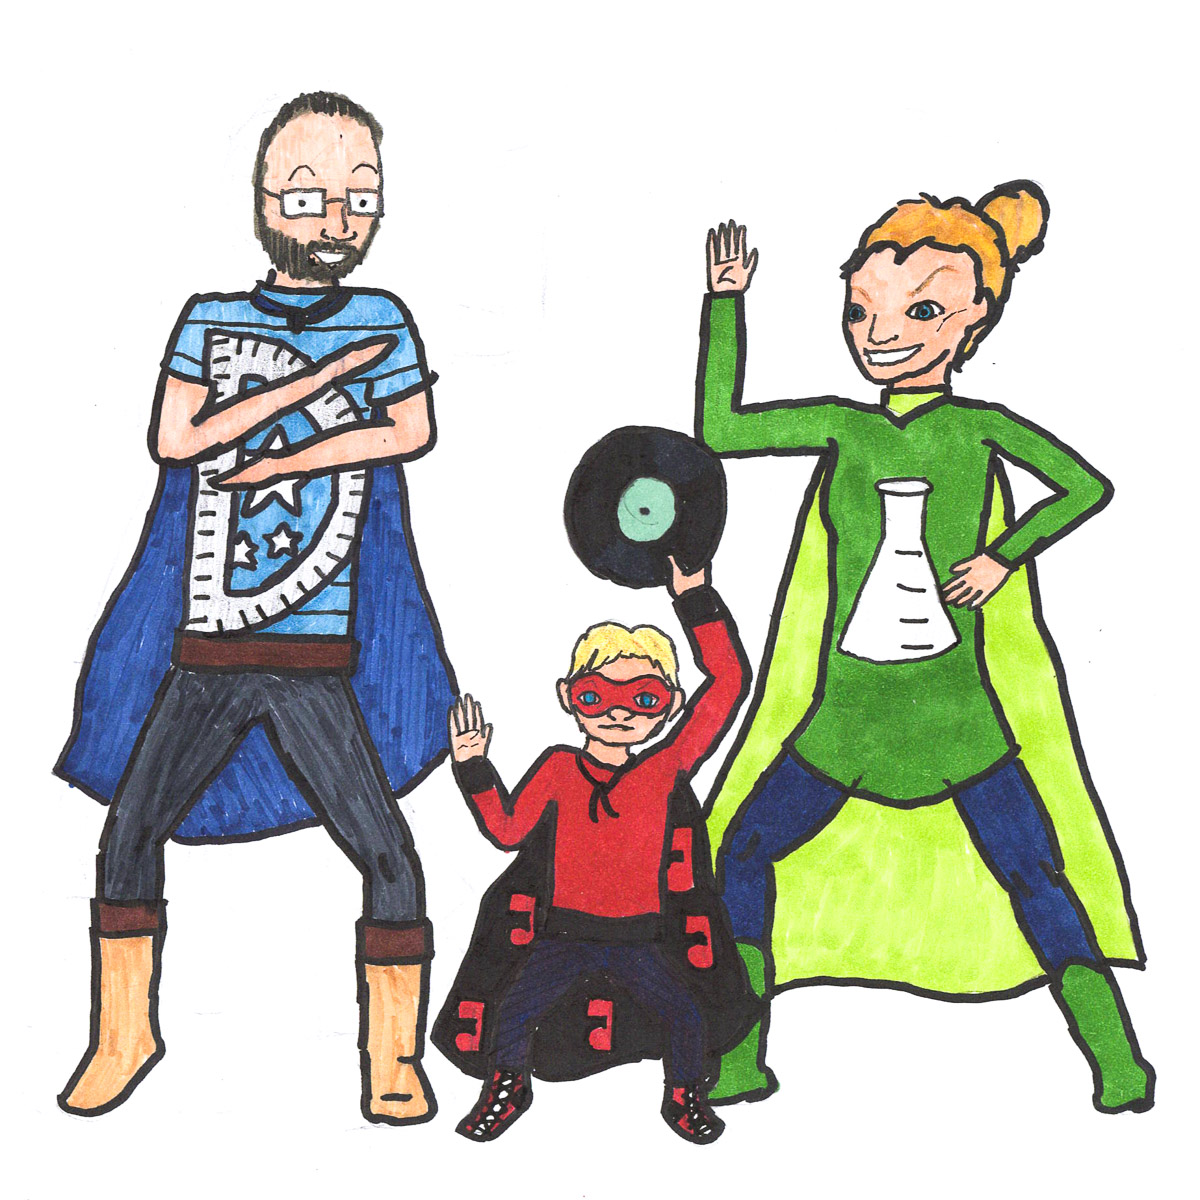 Coe Family: Everyday Superheroes